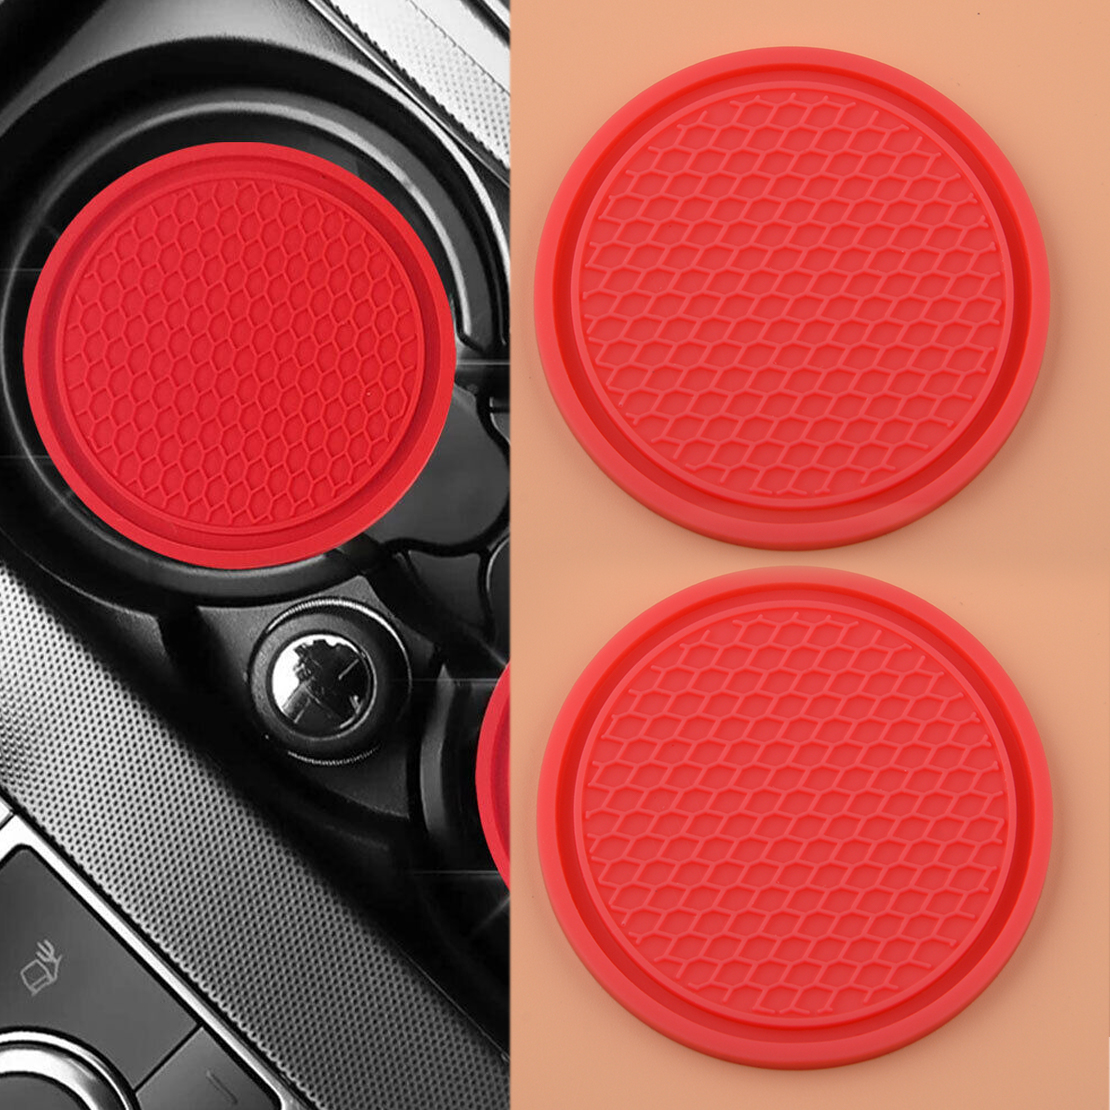 2x Red Cup Holder Anti-Slip Insert Coaster Pad Mat Interior Accessories